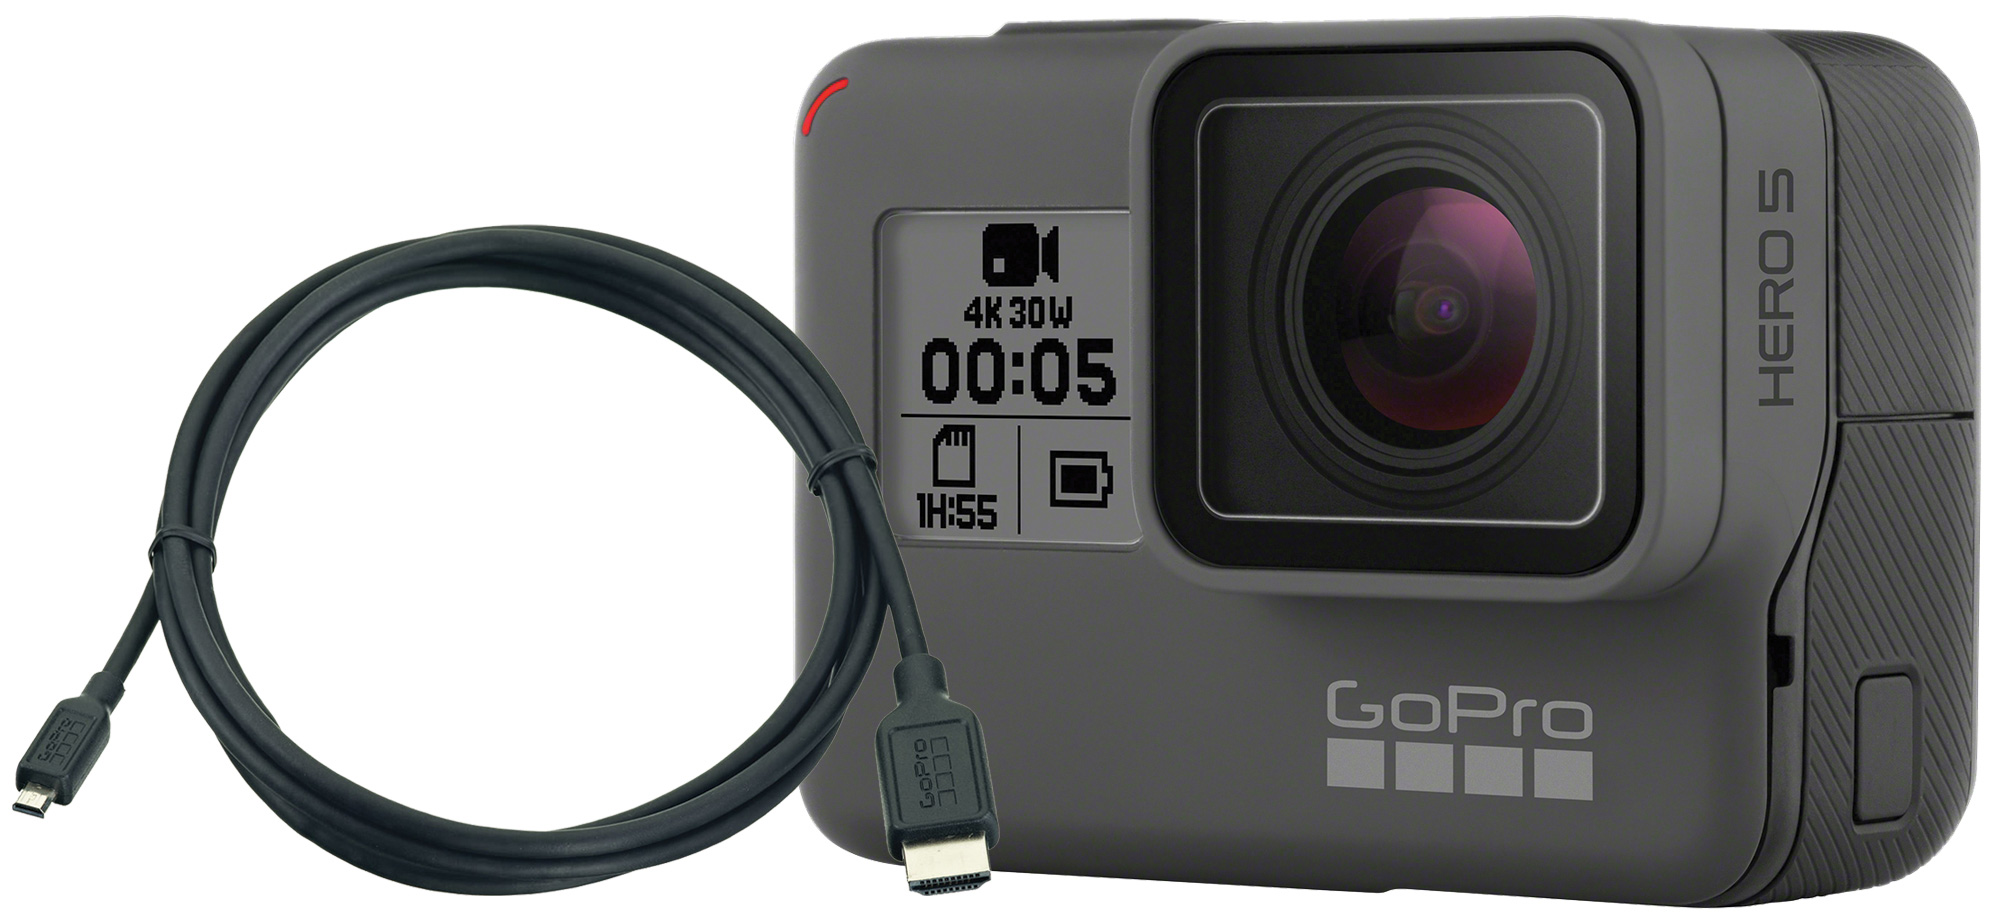 Gopro Hero5 Black 4k Ultra Hd Video 12mp Photo Pov Video Action